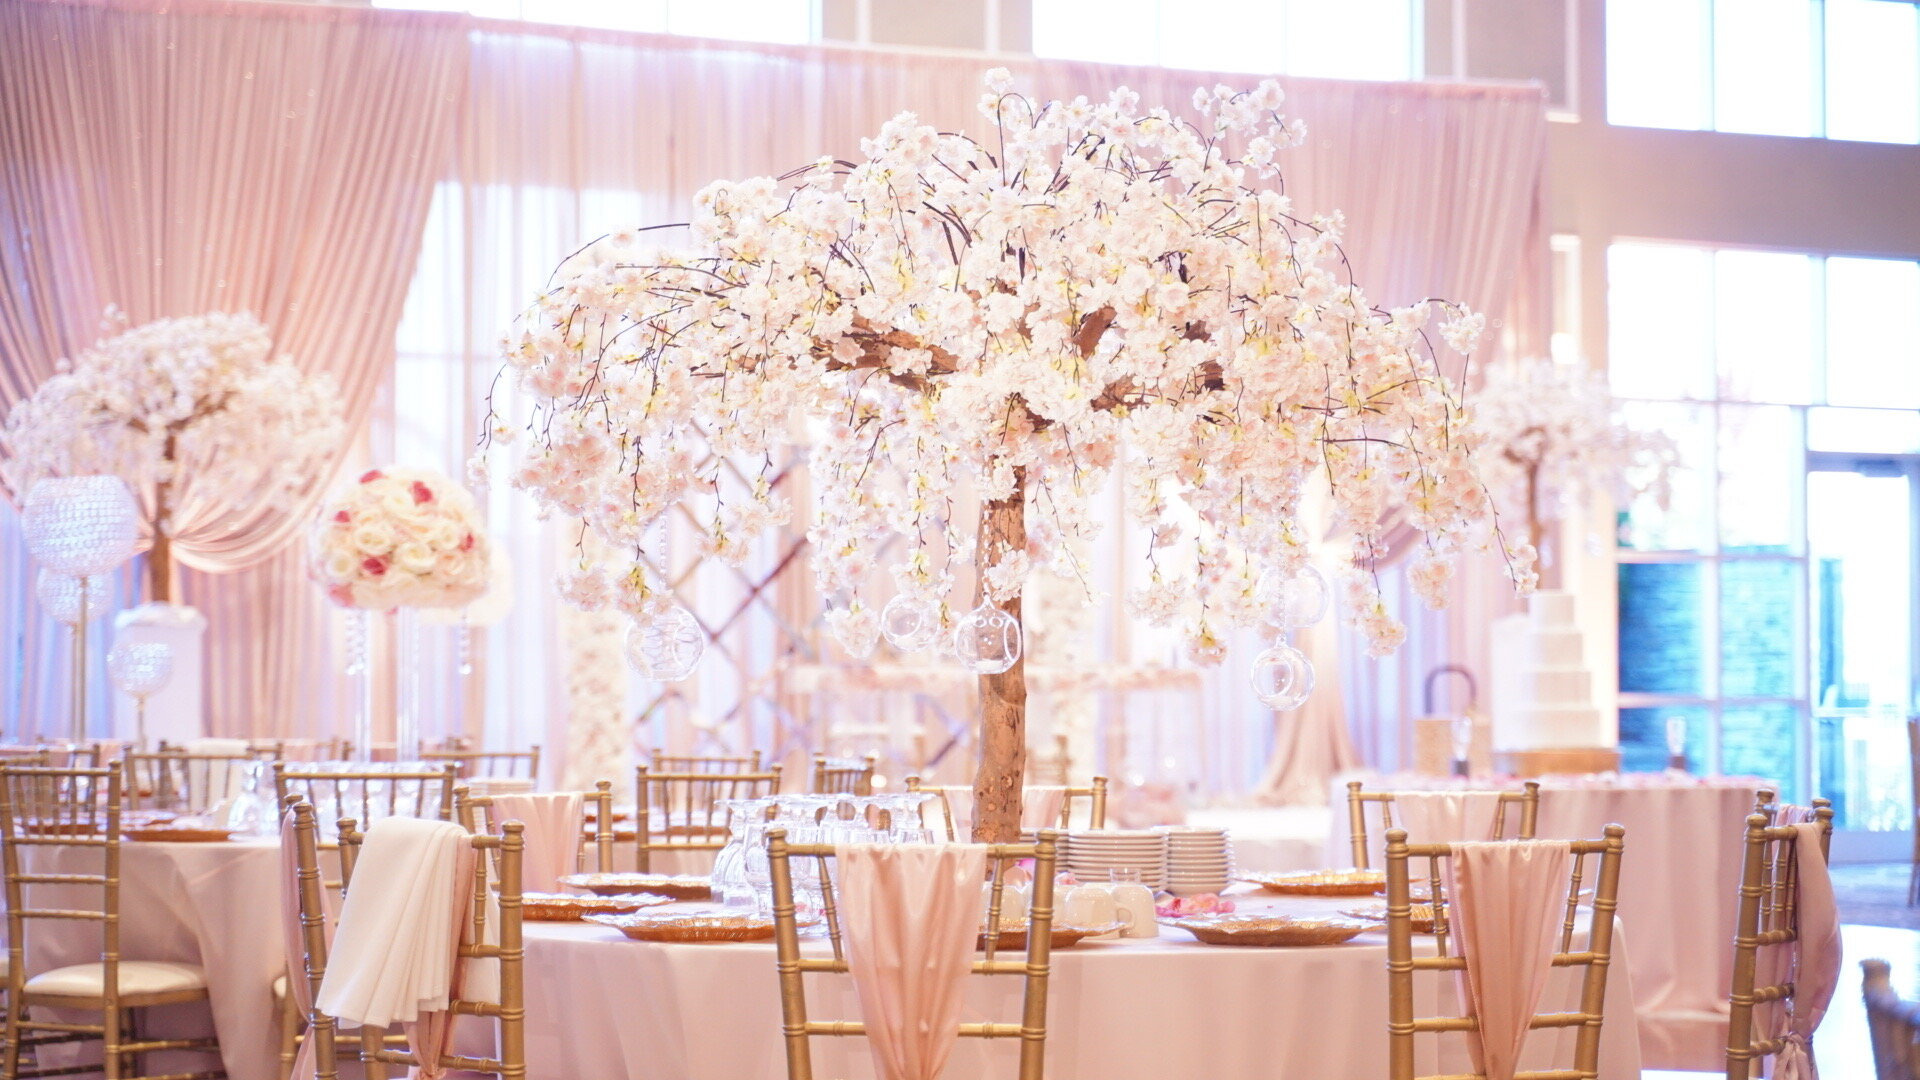 Dinoflos wedding decor preferred vendor acrylic sweetheart tables chicago floral centerpieces cherry blossom tree gold centerpieces event lighting white dance floor  (2).JPG